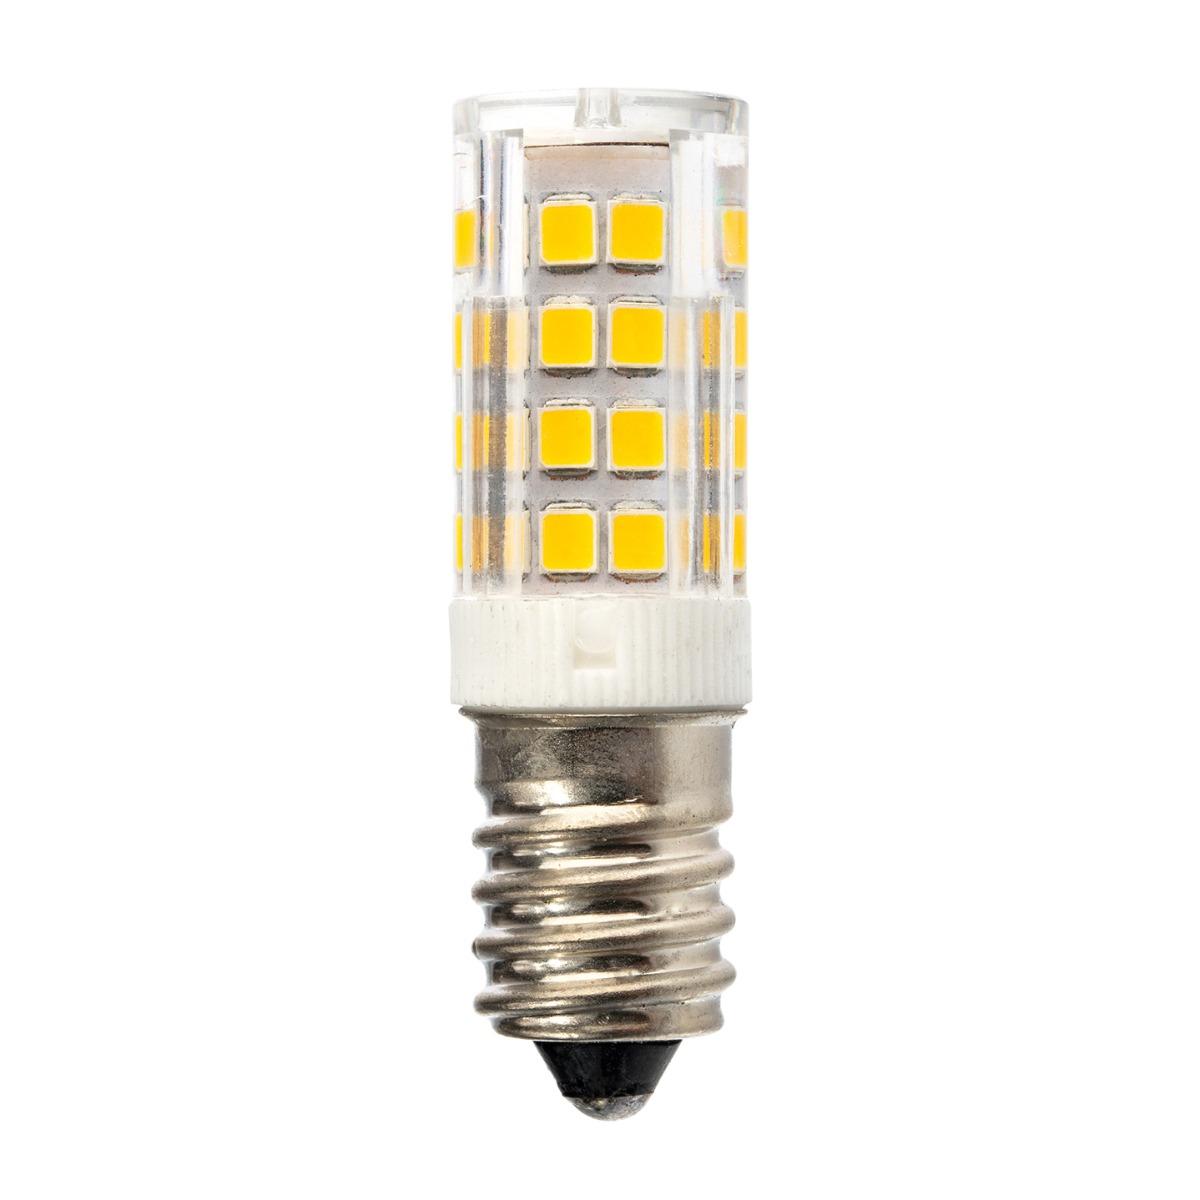 LED žárovka LED E14 T25 5W = 40W 470lm 3000K Teplá bílá 320° LUMILED